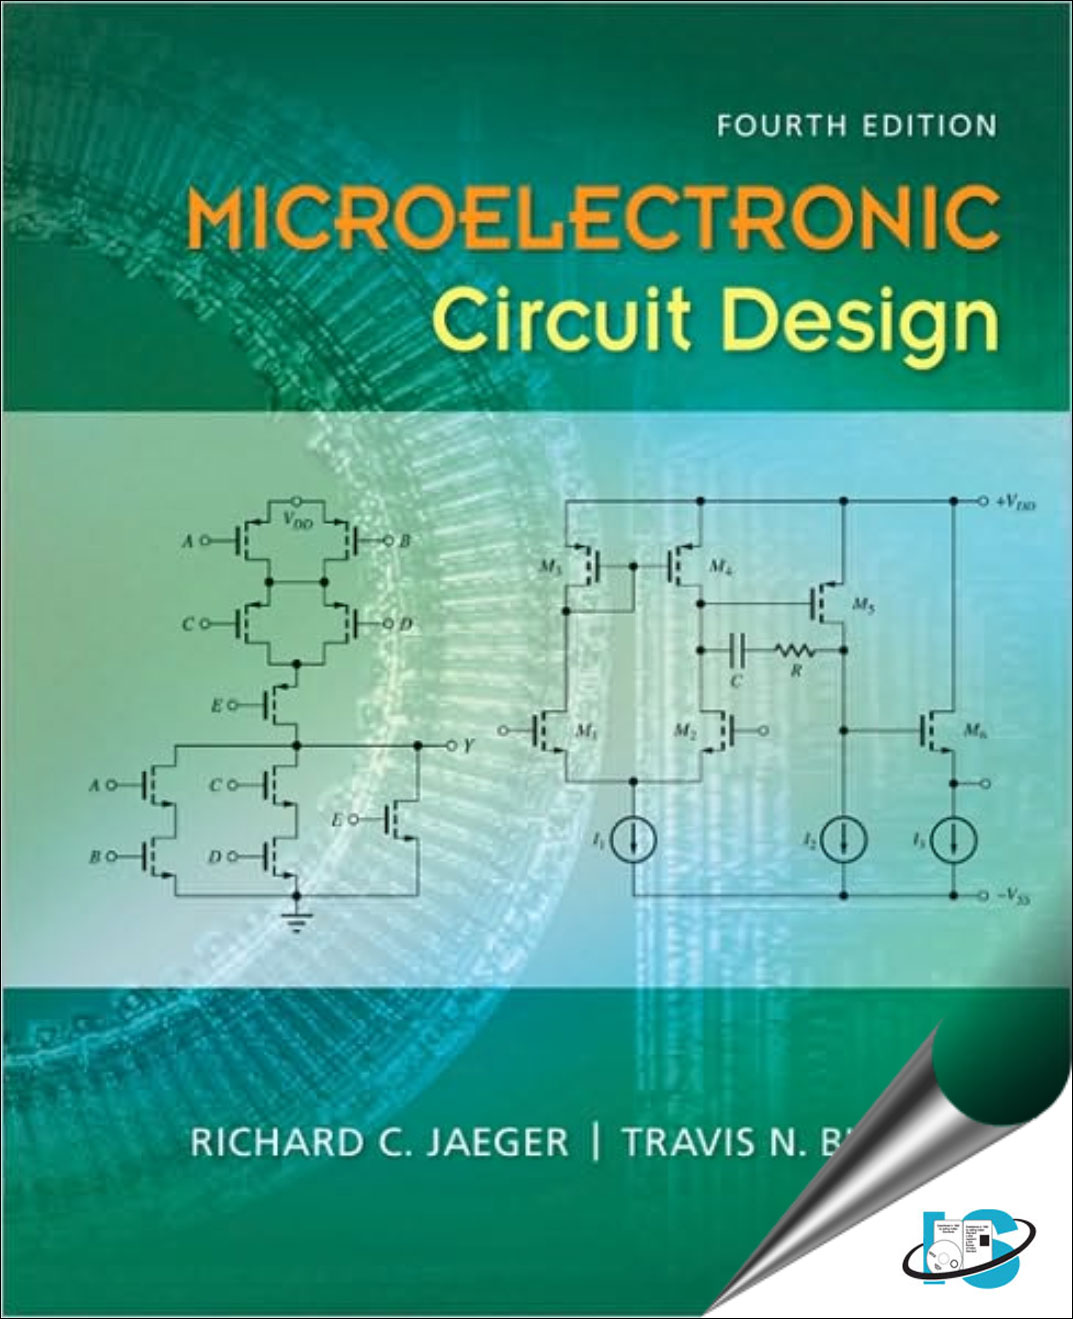 Microelectronic Circuit Design Richard Jaeger and Travis Blalock